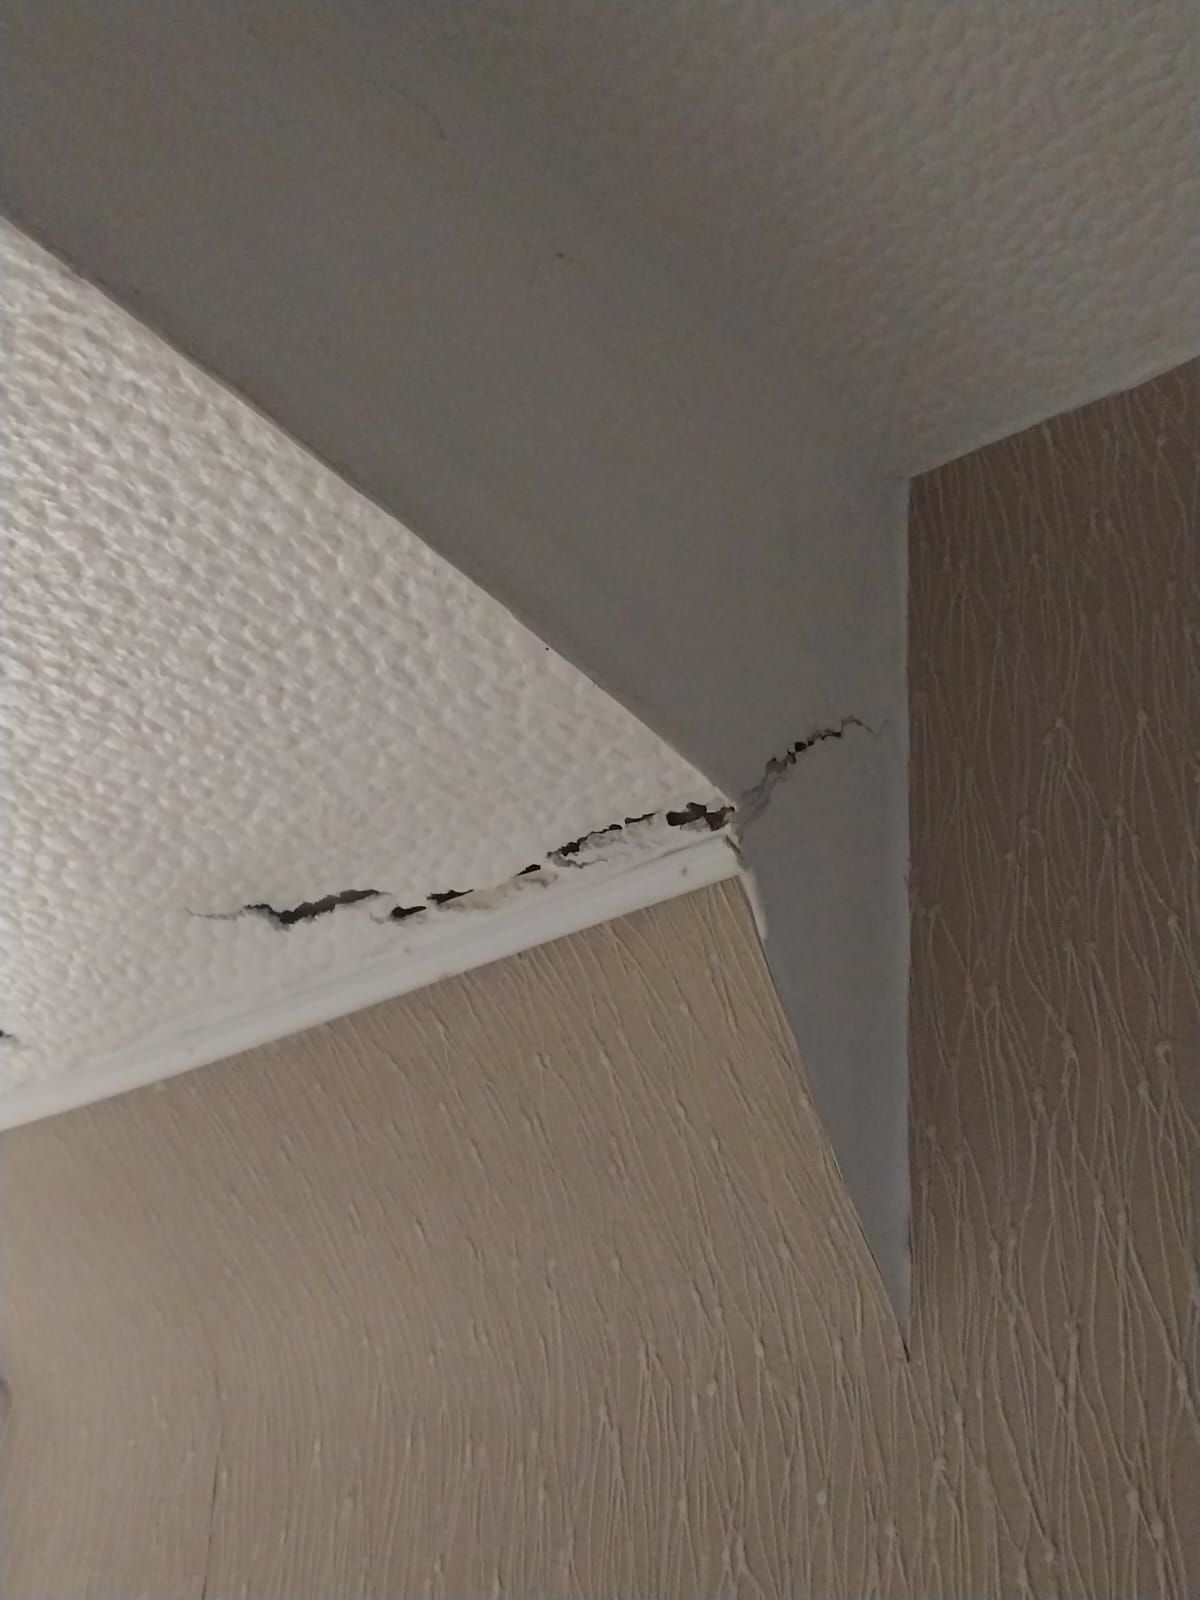 cracks in house wall Liverpool Merseyside